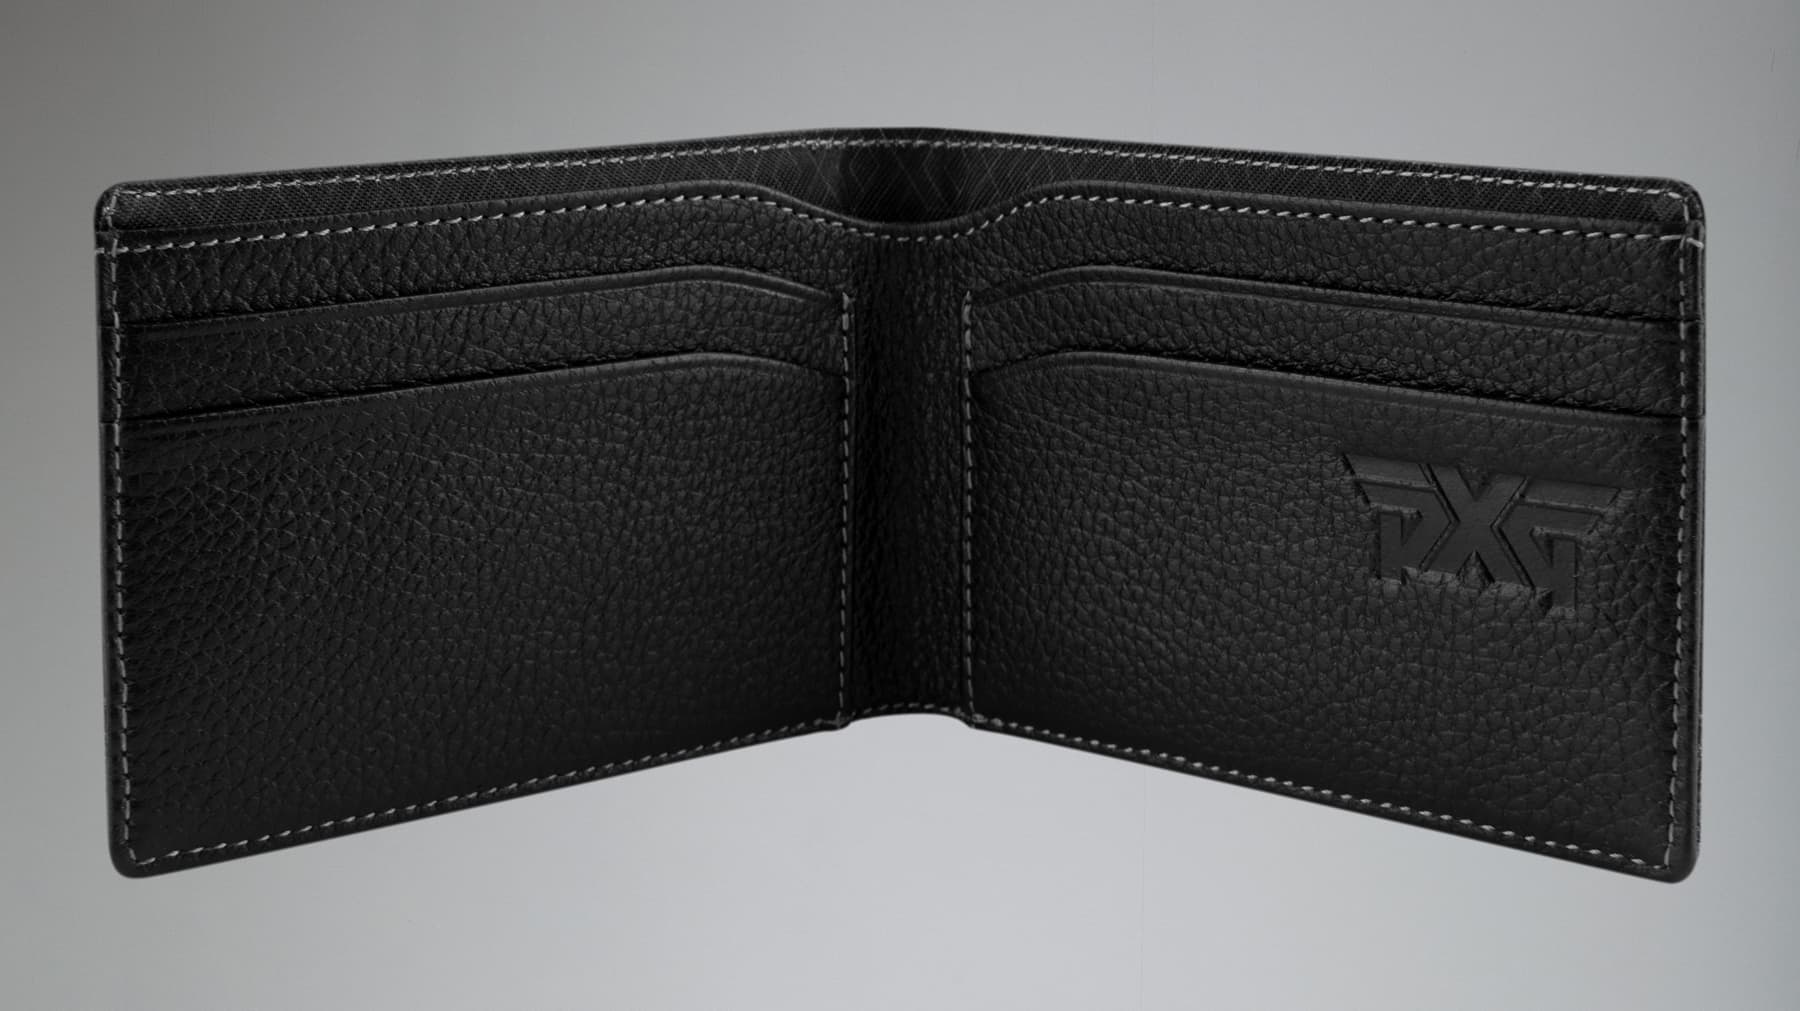 PXG Unisex Fairway Camo Lifestyle Bi-Fold Wallet